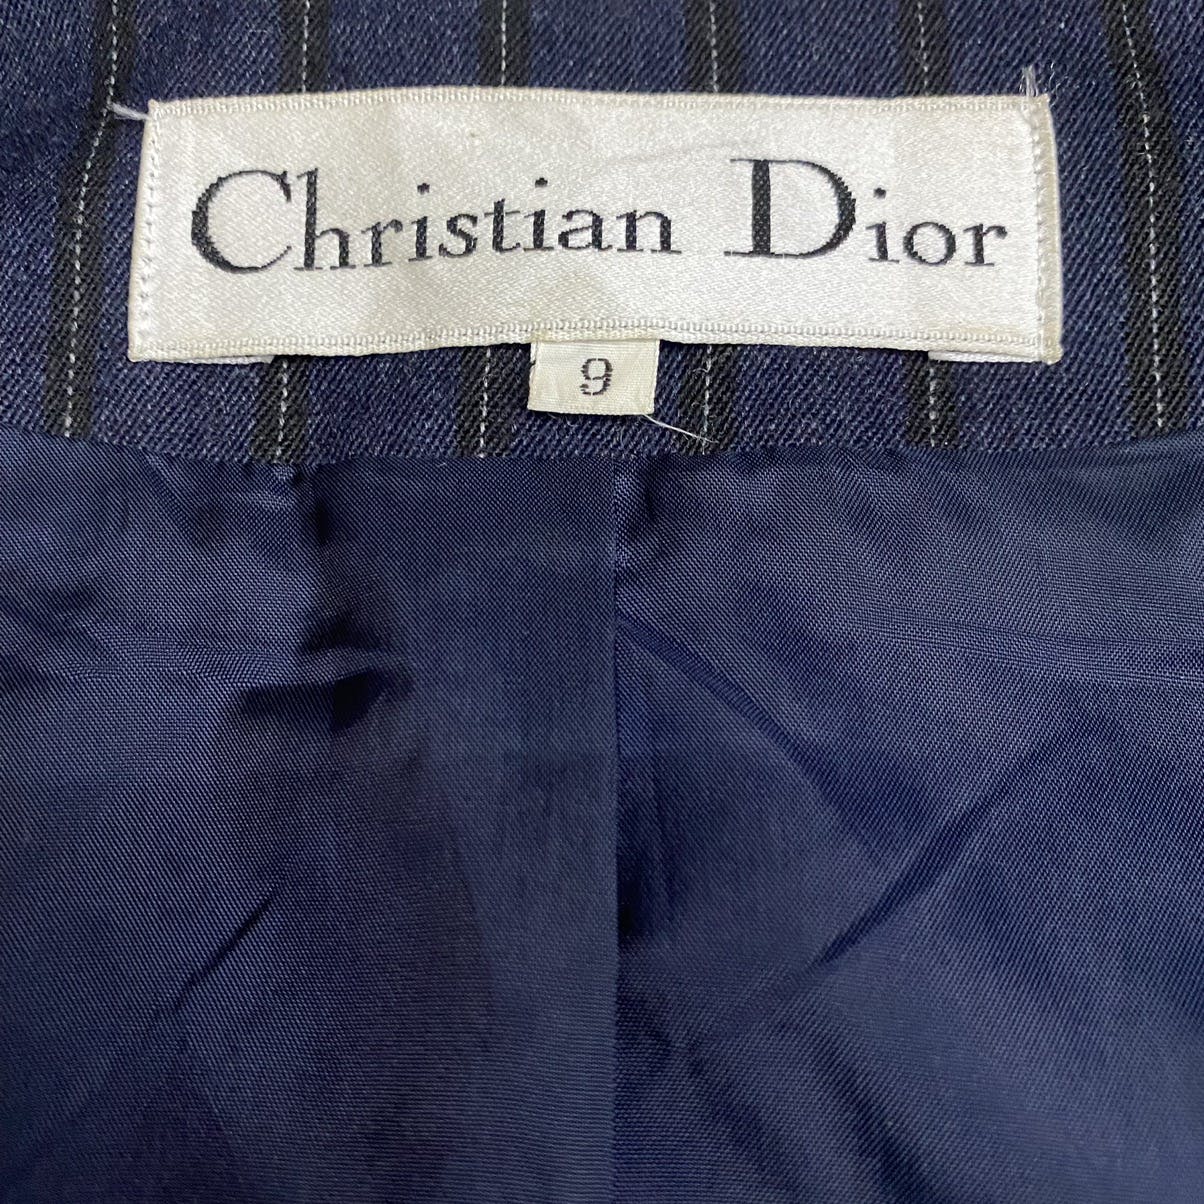 Christian Dior Monsieur - Christian Dior Single-Breasted Coat slant button Jacket - 10